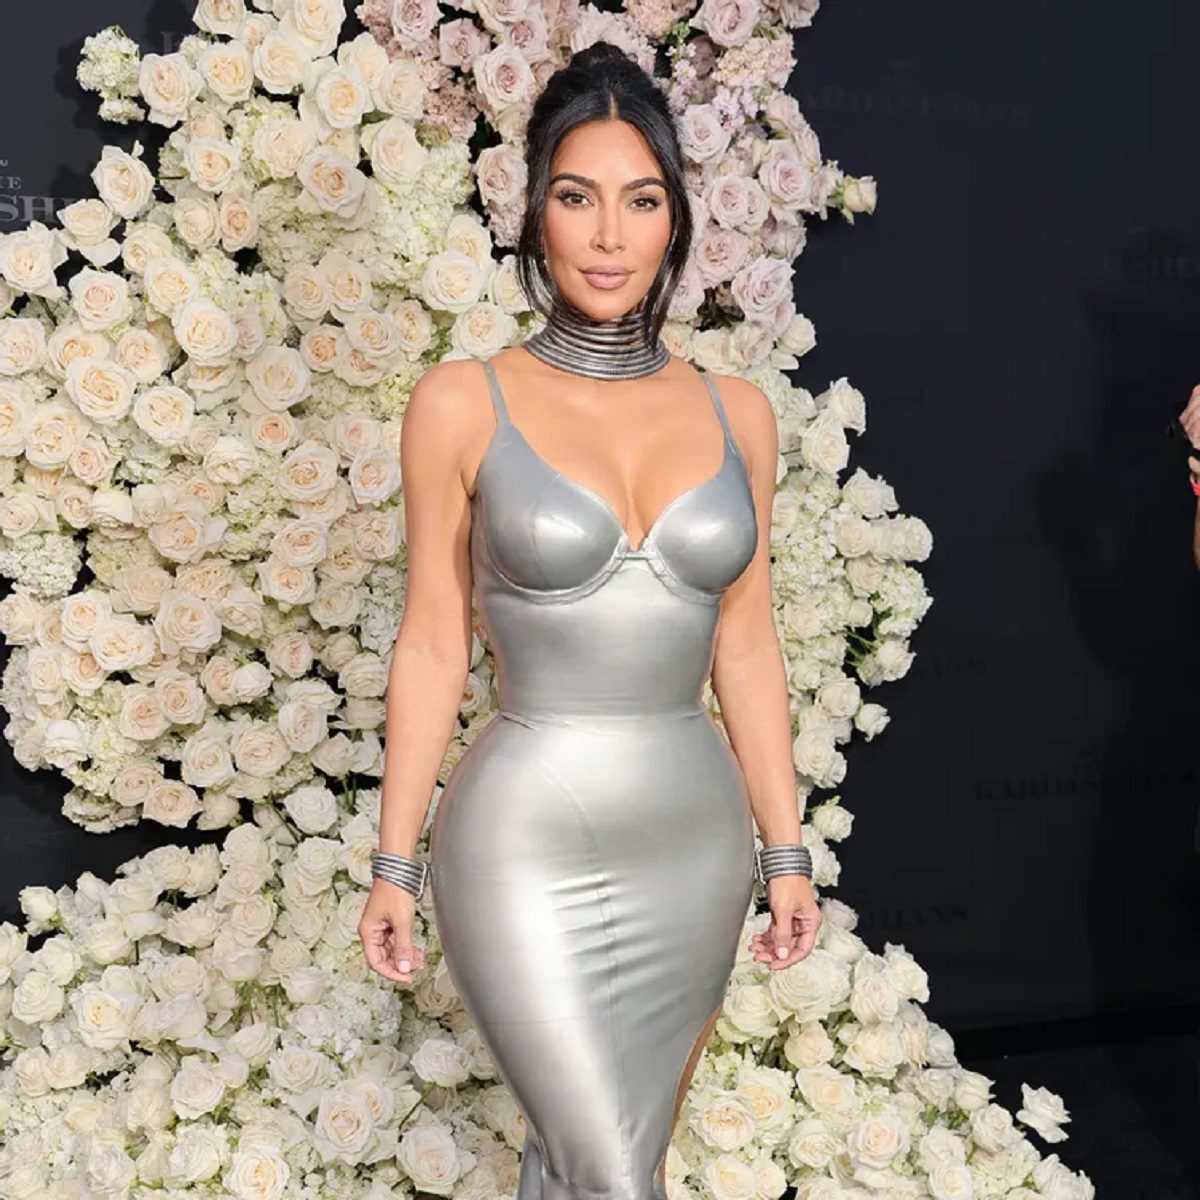 Kim Kardashian Hot Bikini Pictures: Check Out Kim Slaying In A Sexy Silver Bikini Attracting Fans Making Them Go 'Wow'